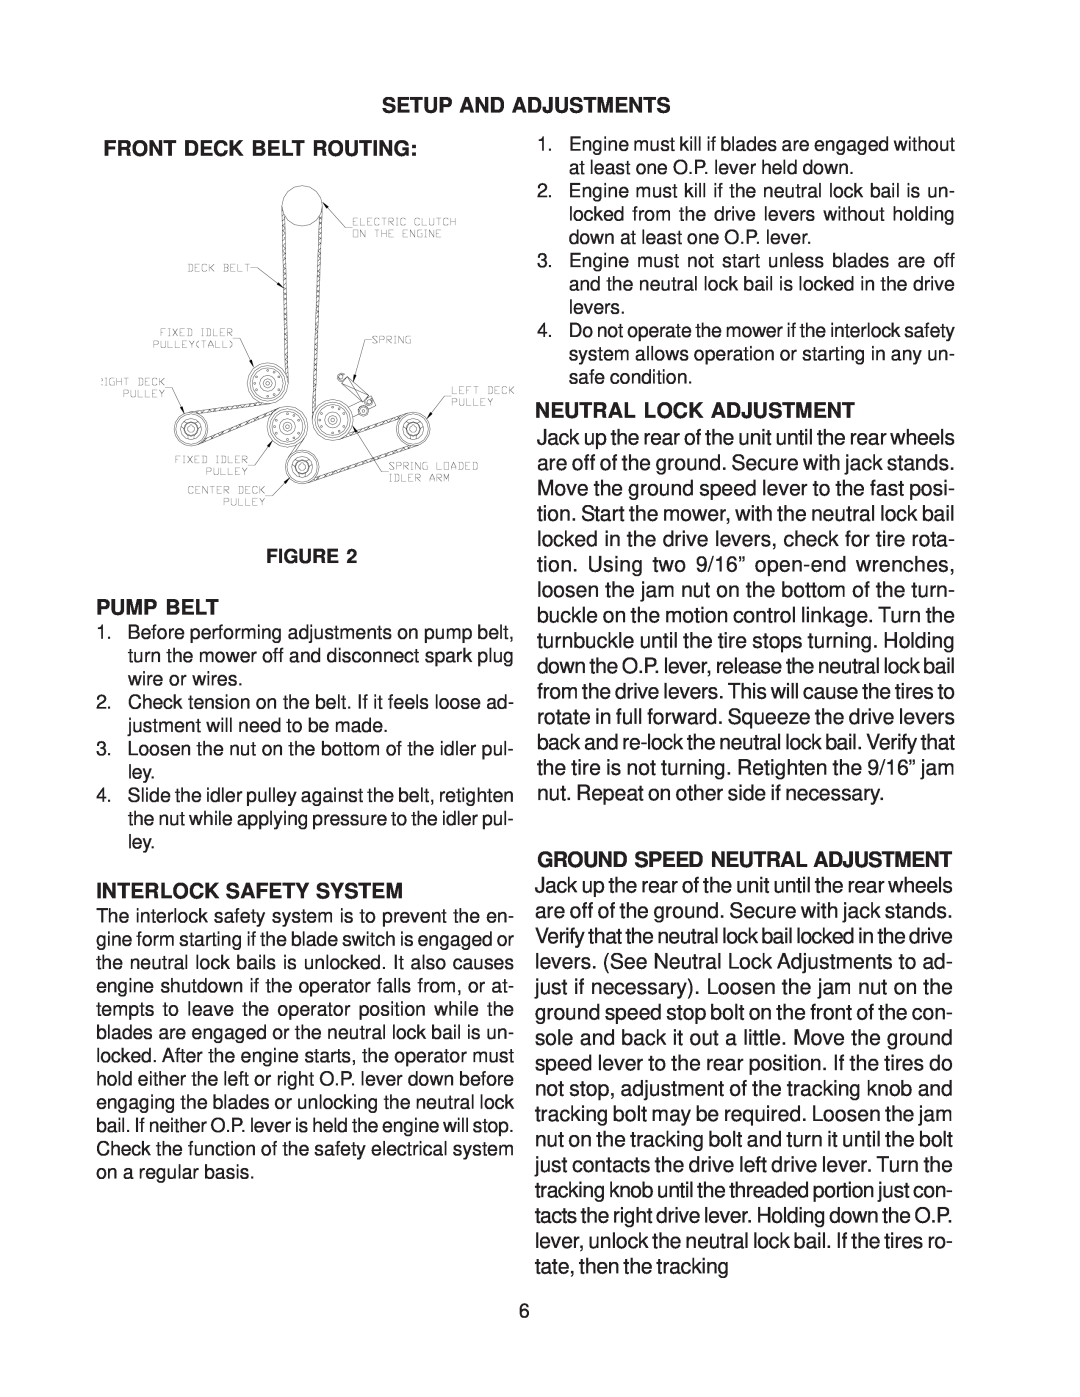 Husqvarna WHF4817 manual Front Deck Belt Routing, Pump Belt, Neutral Lock Adjustment, Ground Speed Neutral Adjustment 